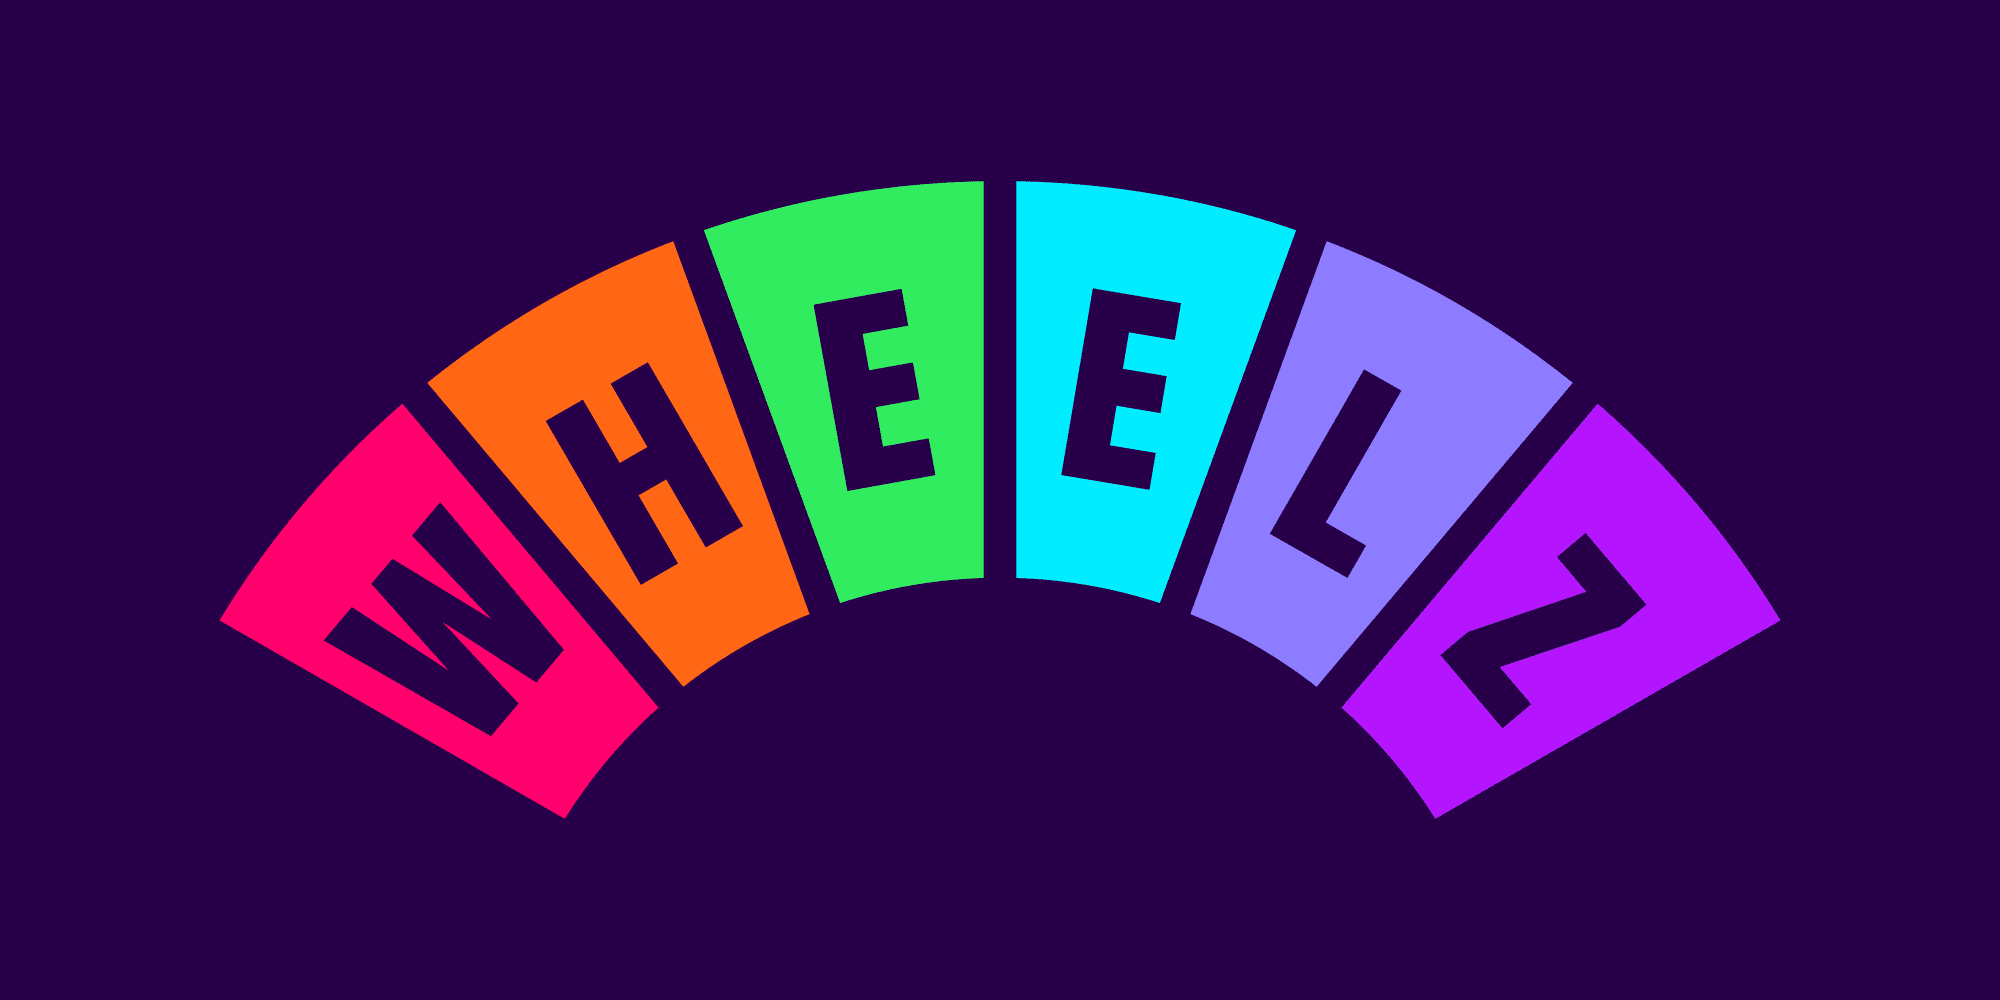 Wheelz logo